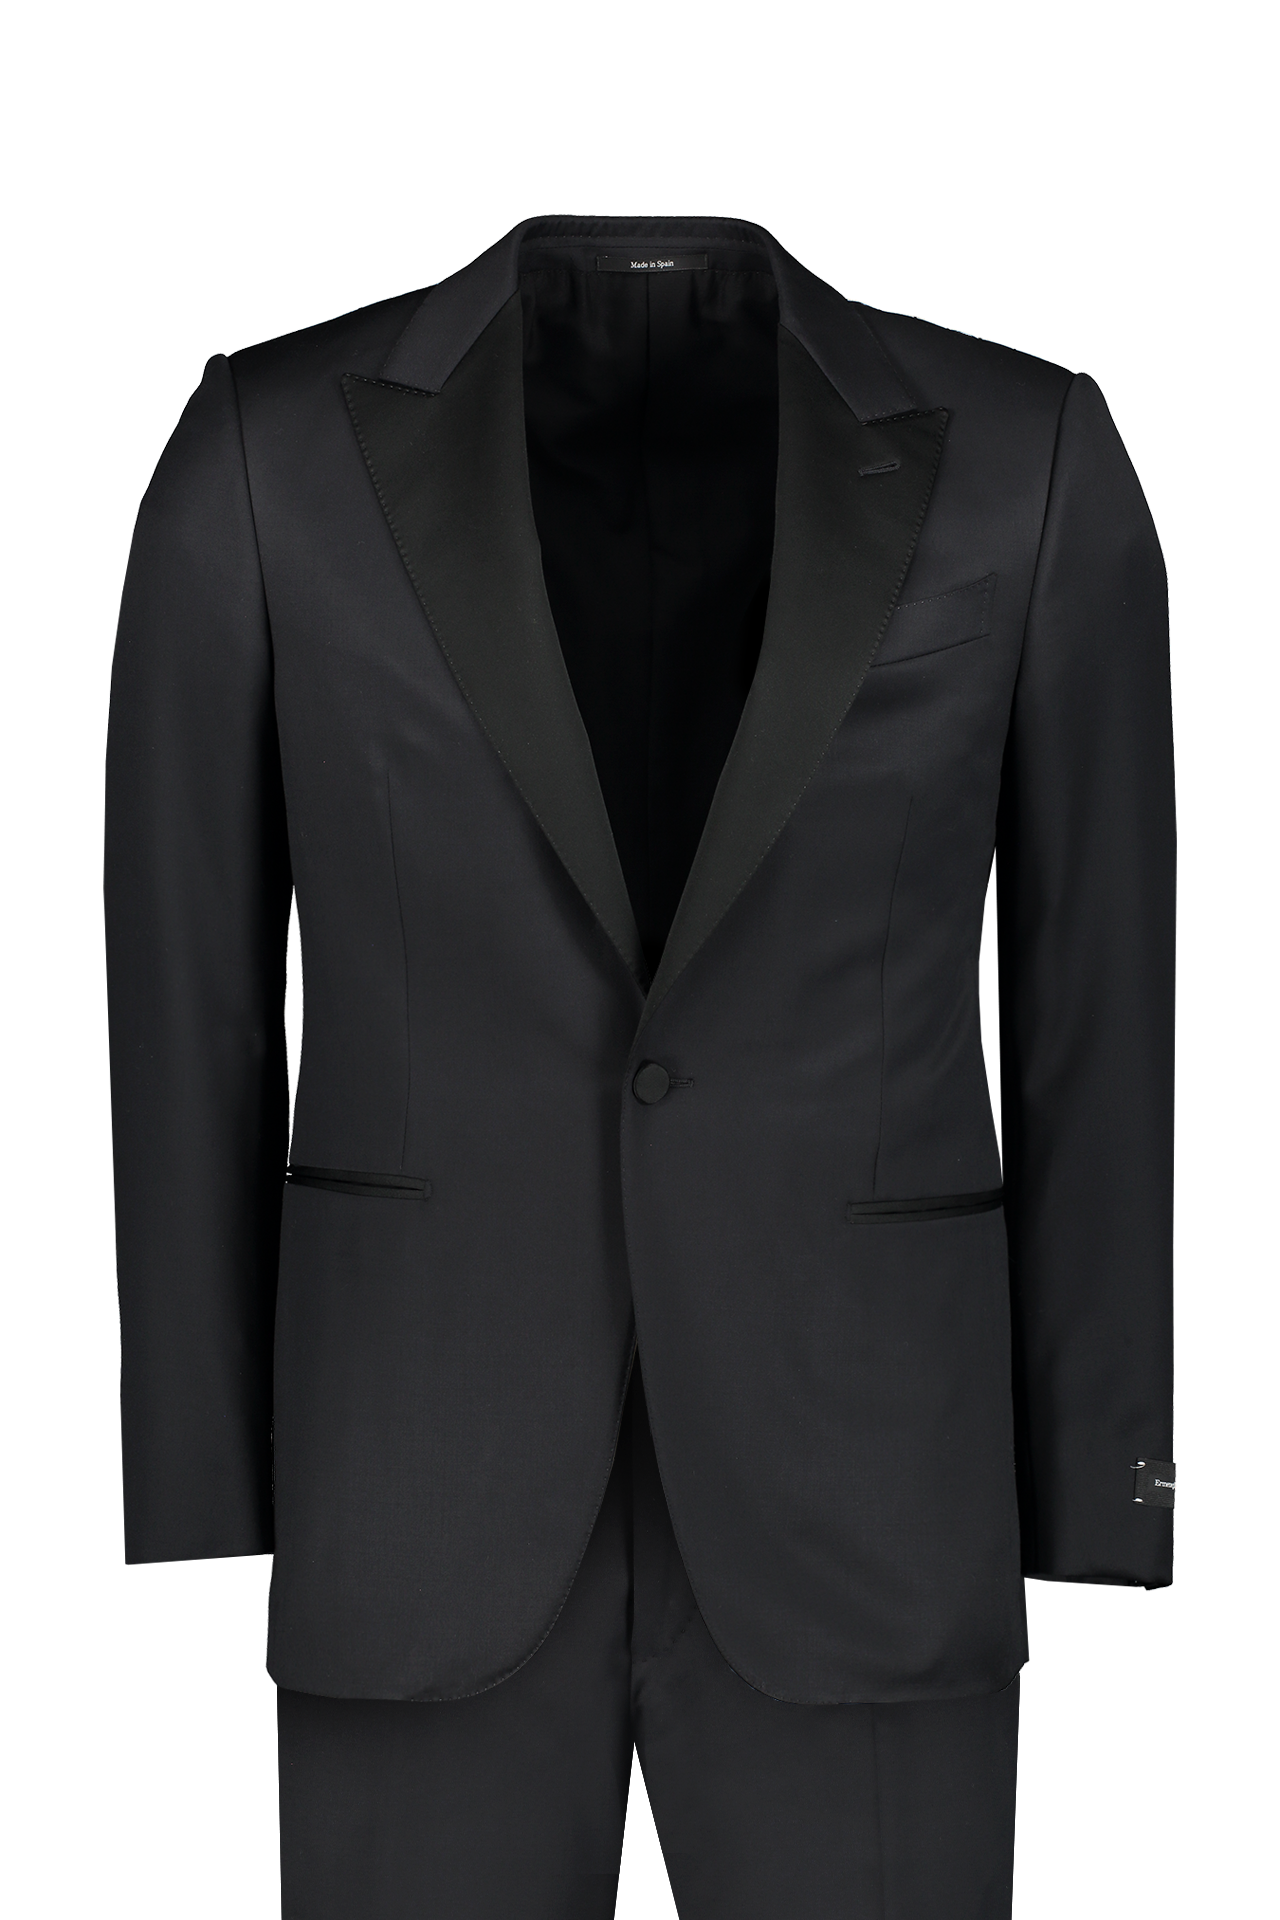 Zegna Micronsphere Tuxedo Black Front Mannequin Image (4371186450547)